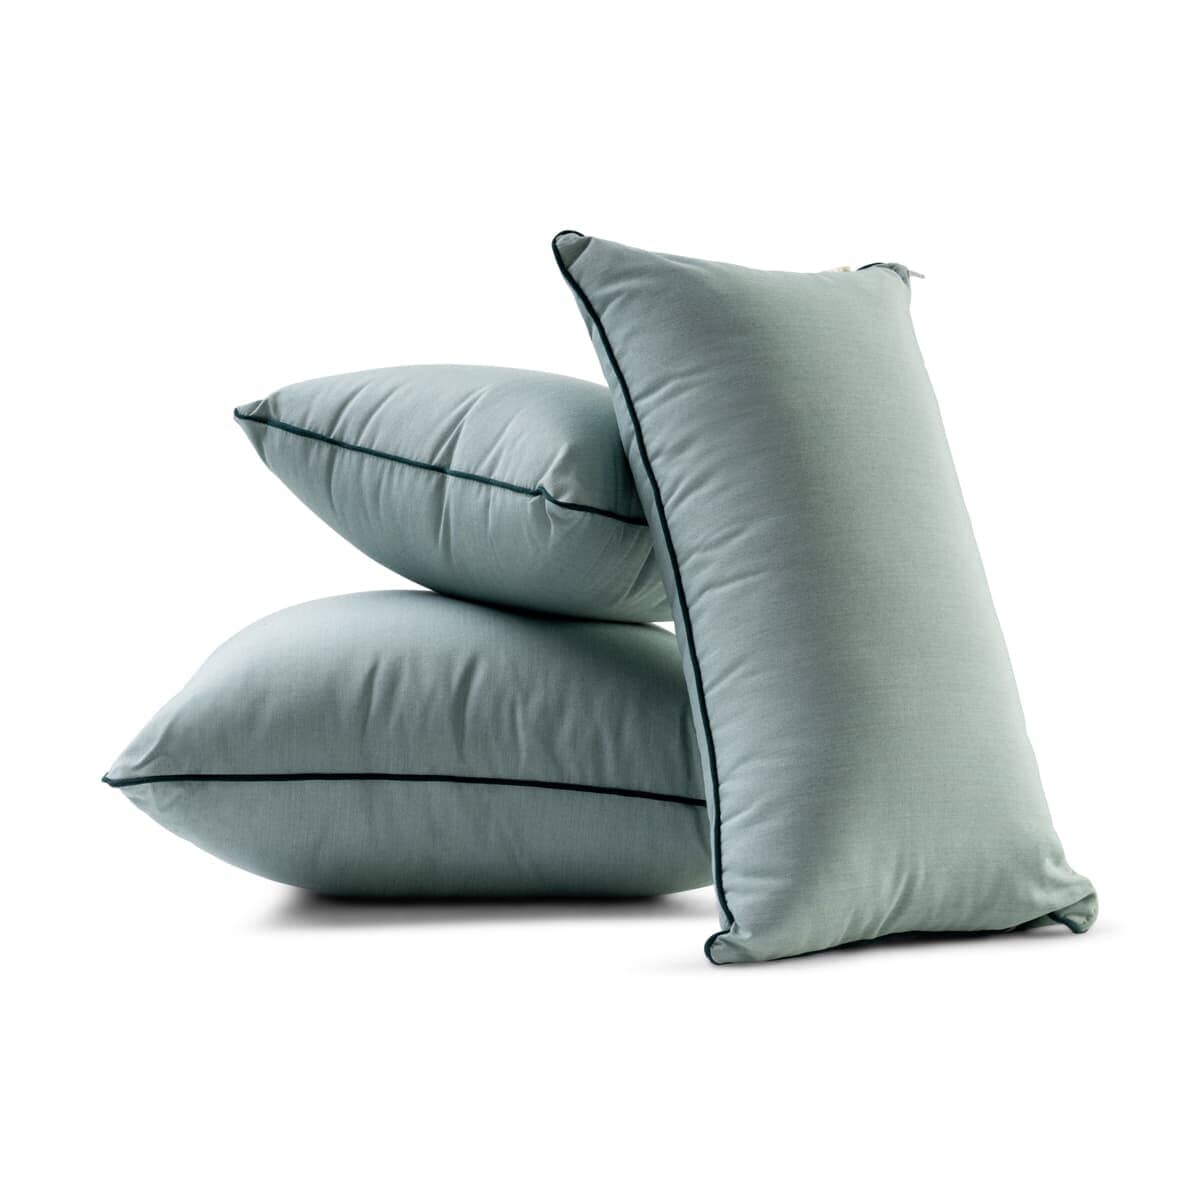 Studio image of riviera green euro throw pillow